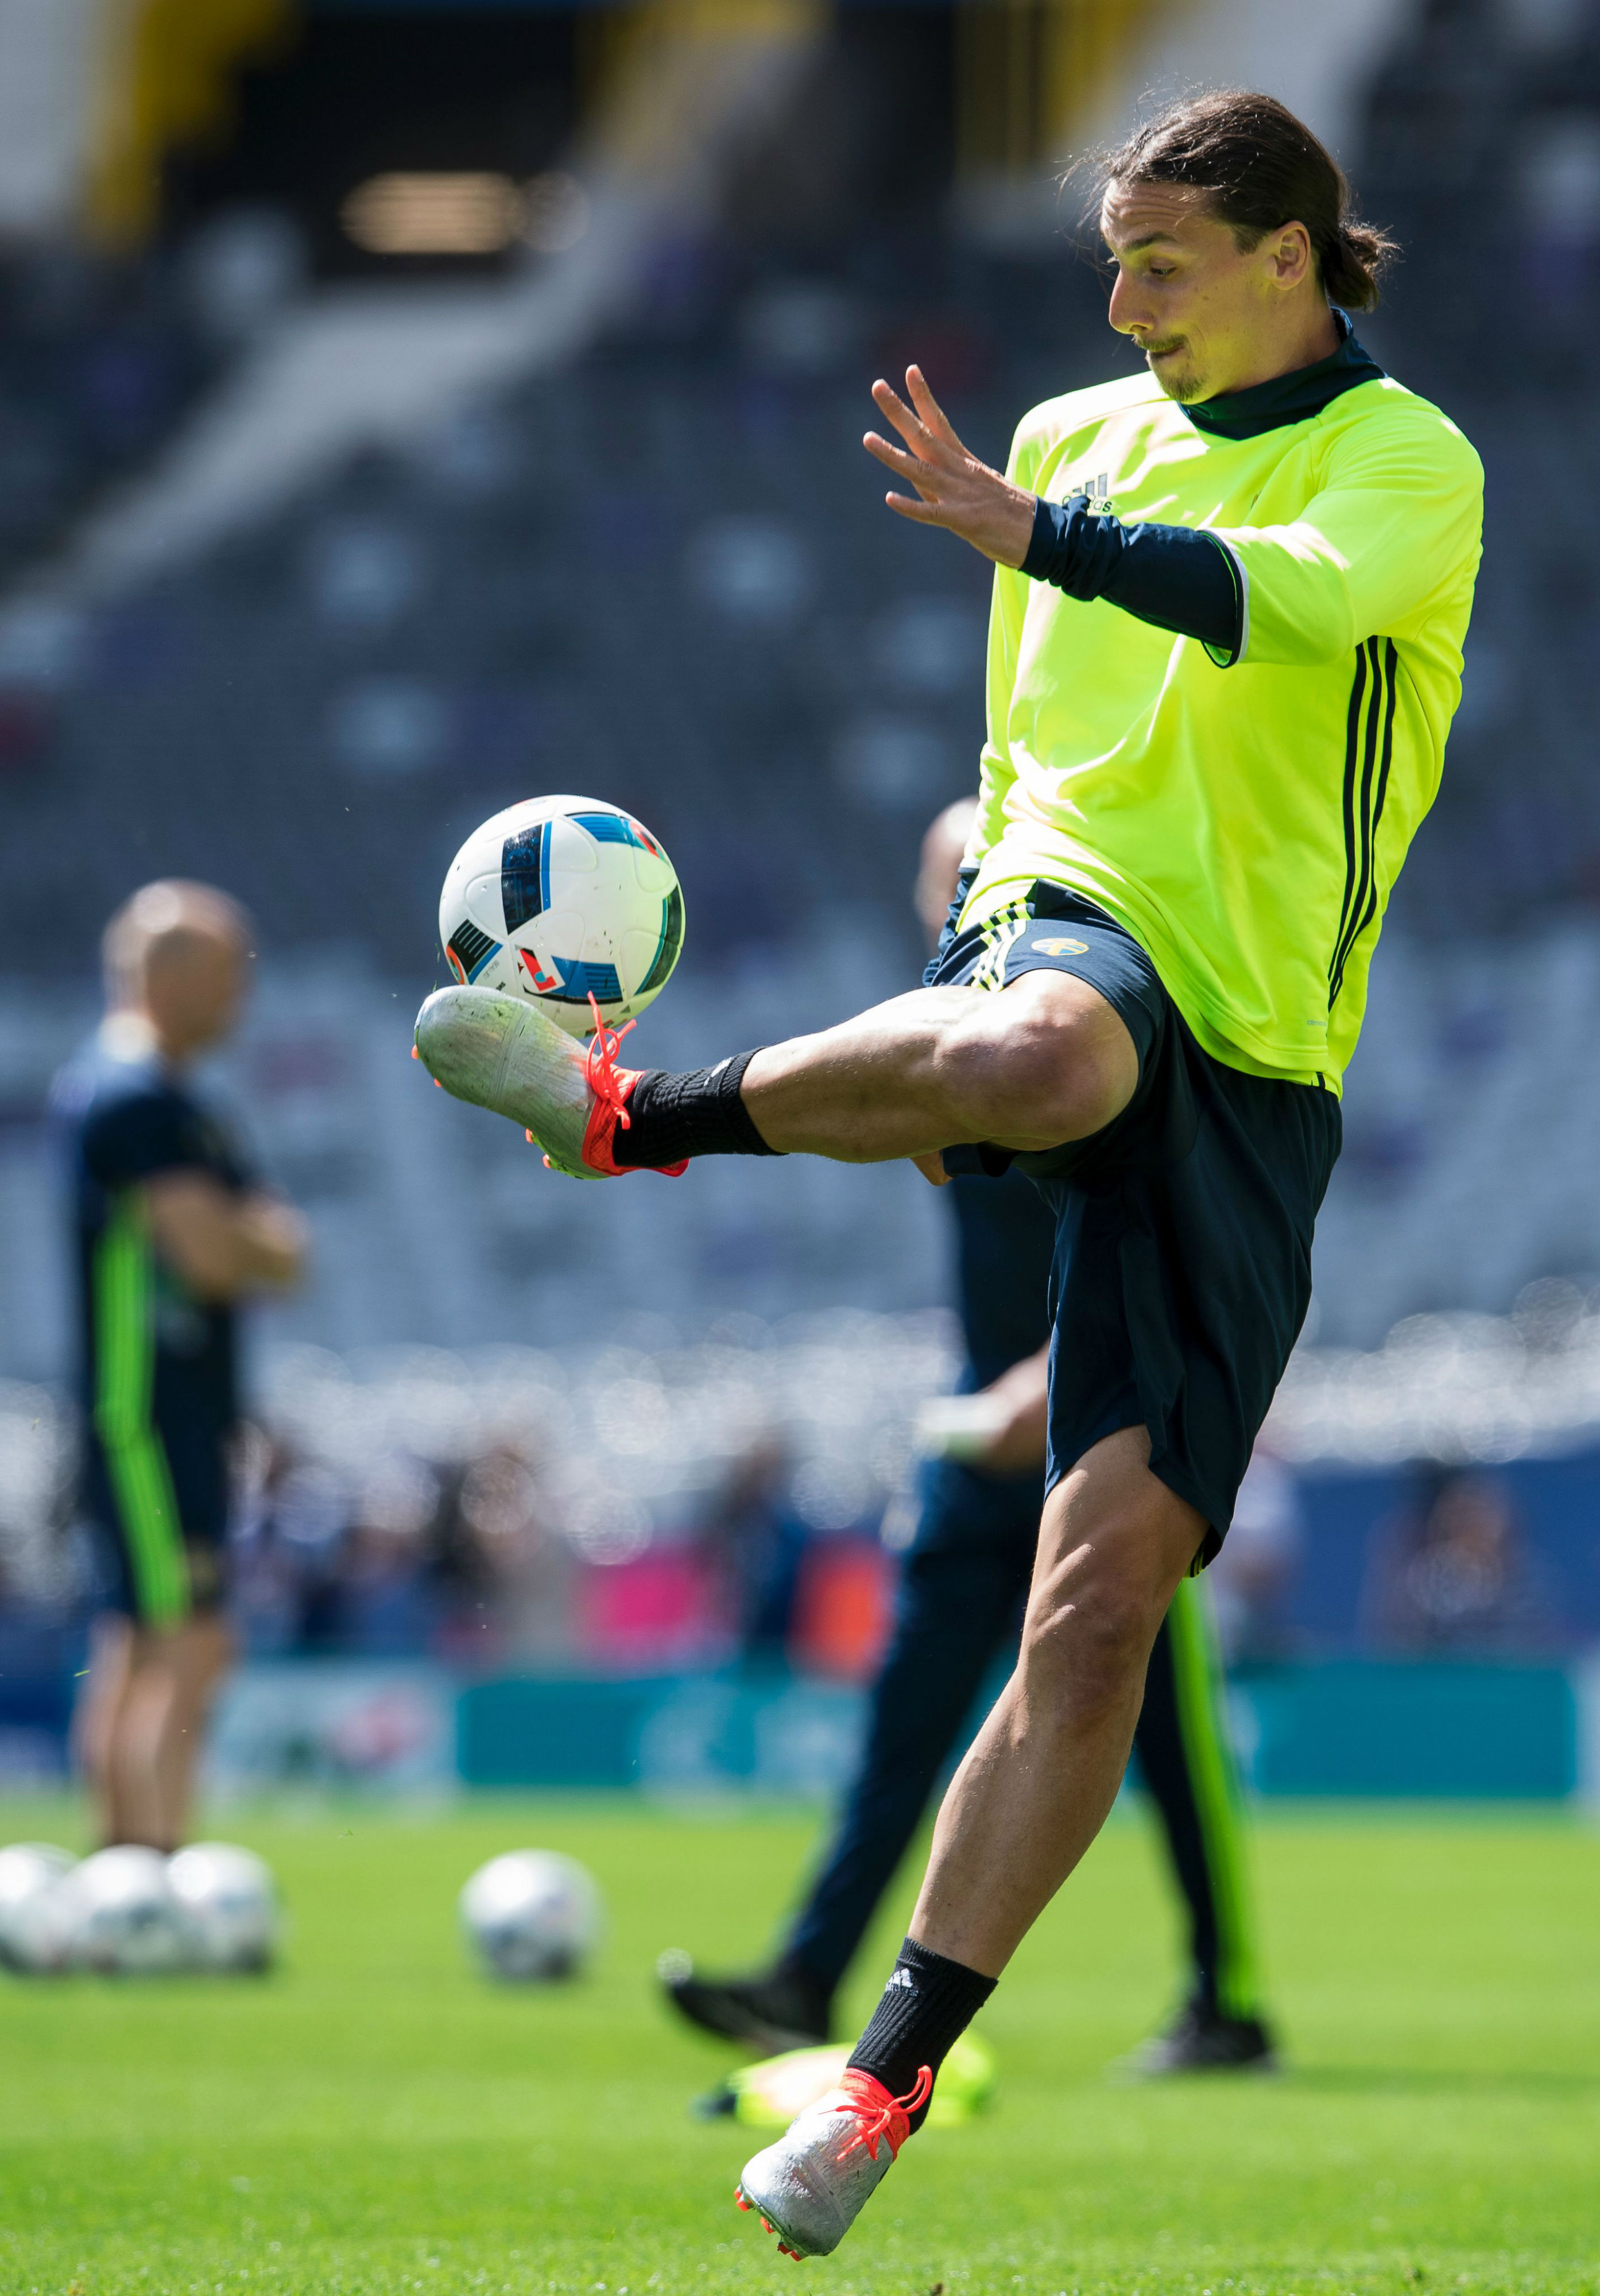 Ibrahimovic de Nike a Adidas avivar los con el Manchester United | Goal.com Colombia